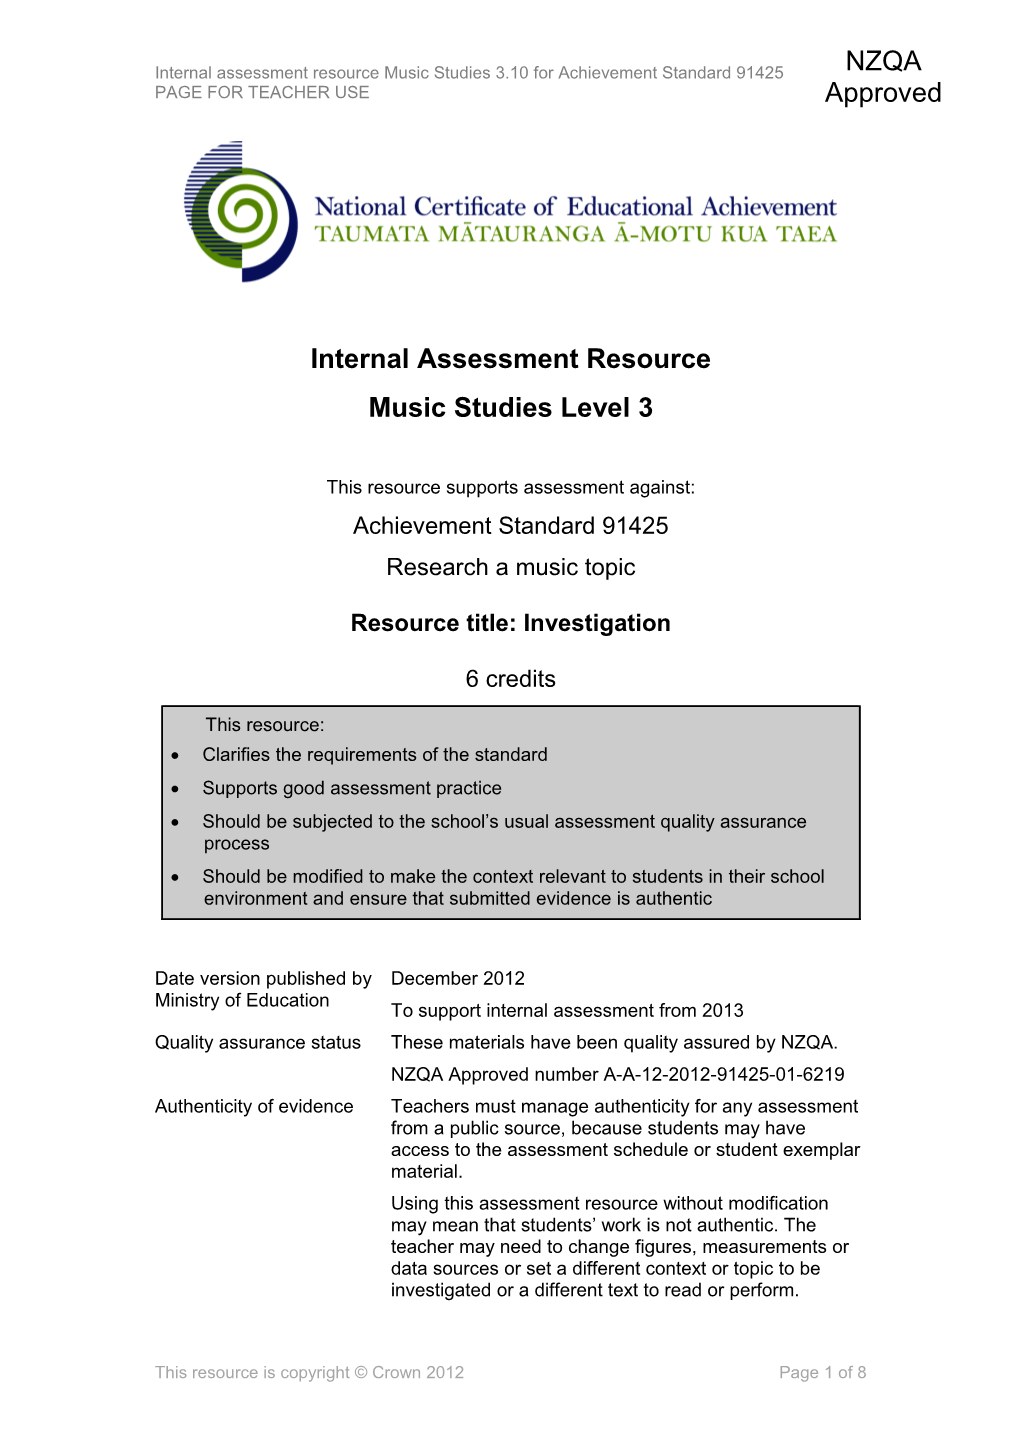 Level 3 Music Studies Internal Assessment Resource